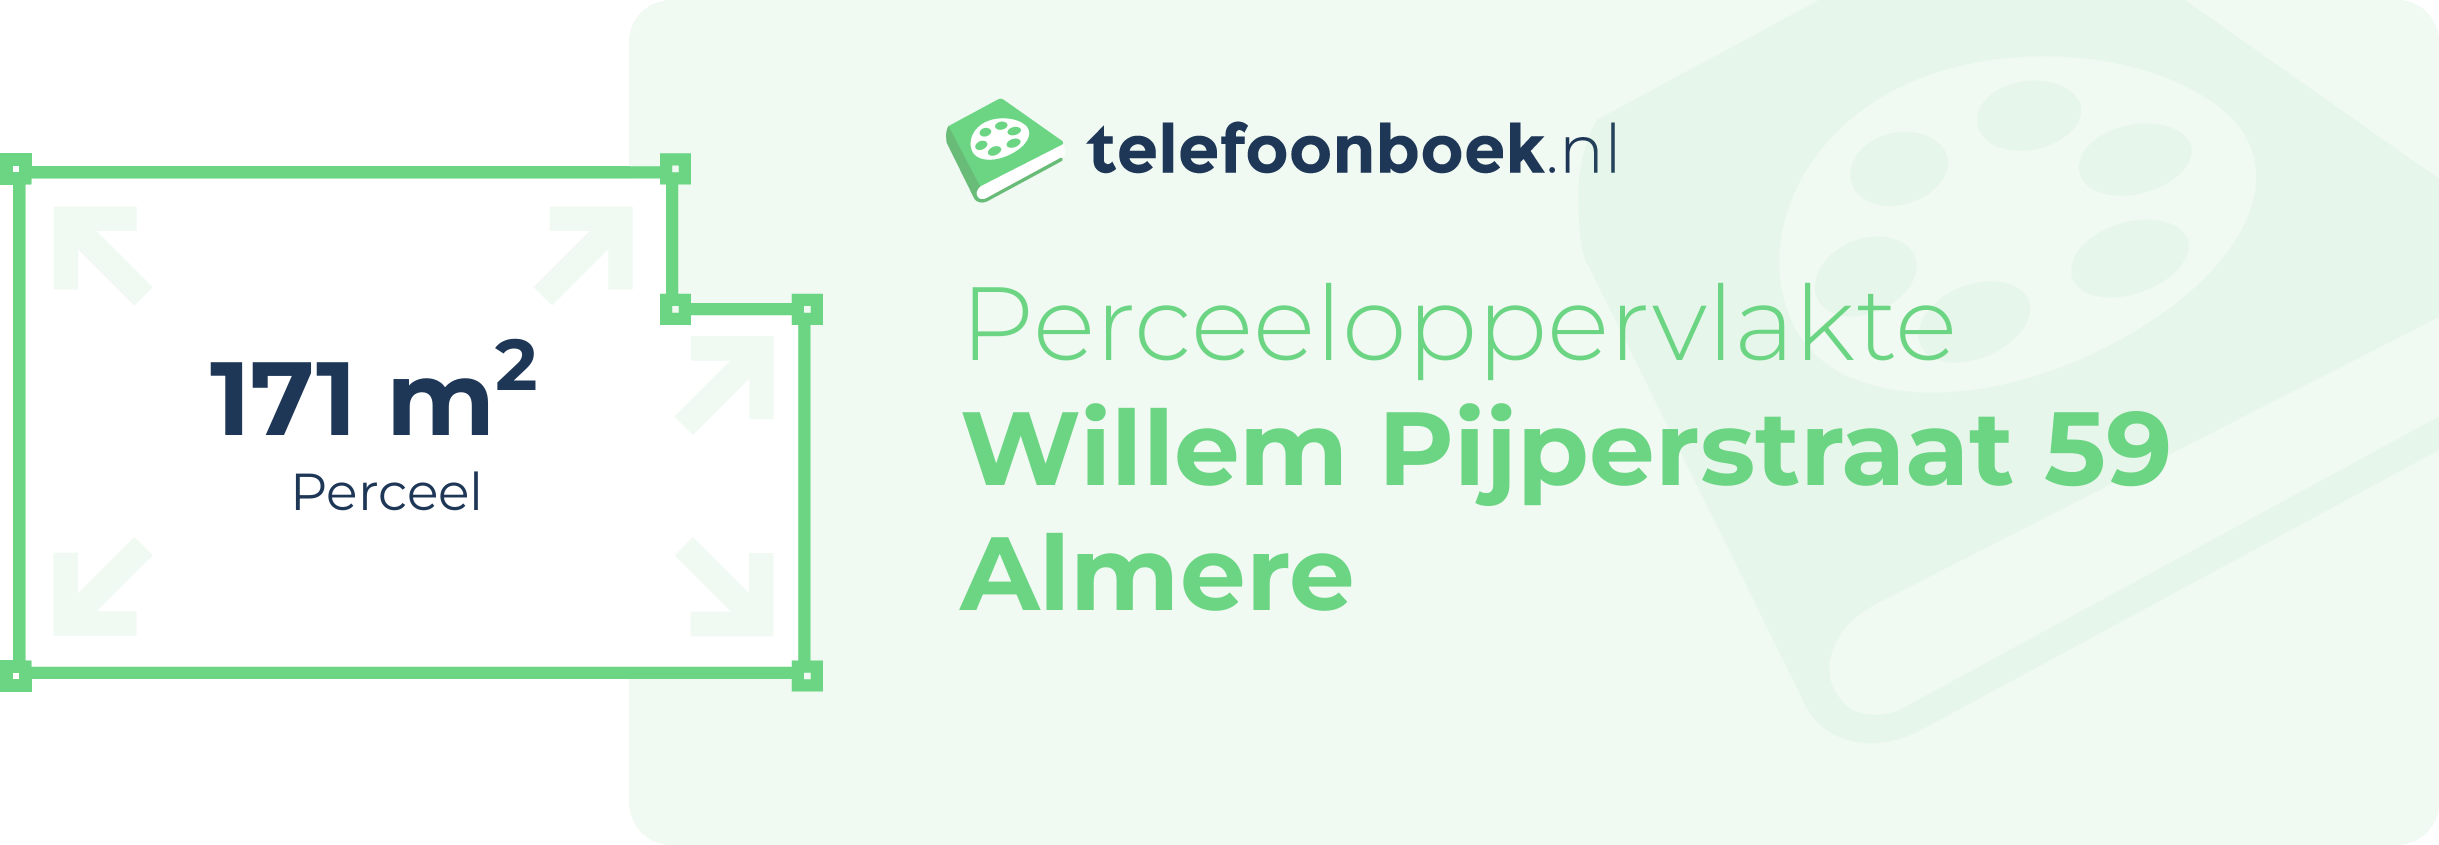 Perceeloppervlakte Willem Pijperstraat 59 Almere